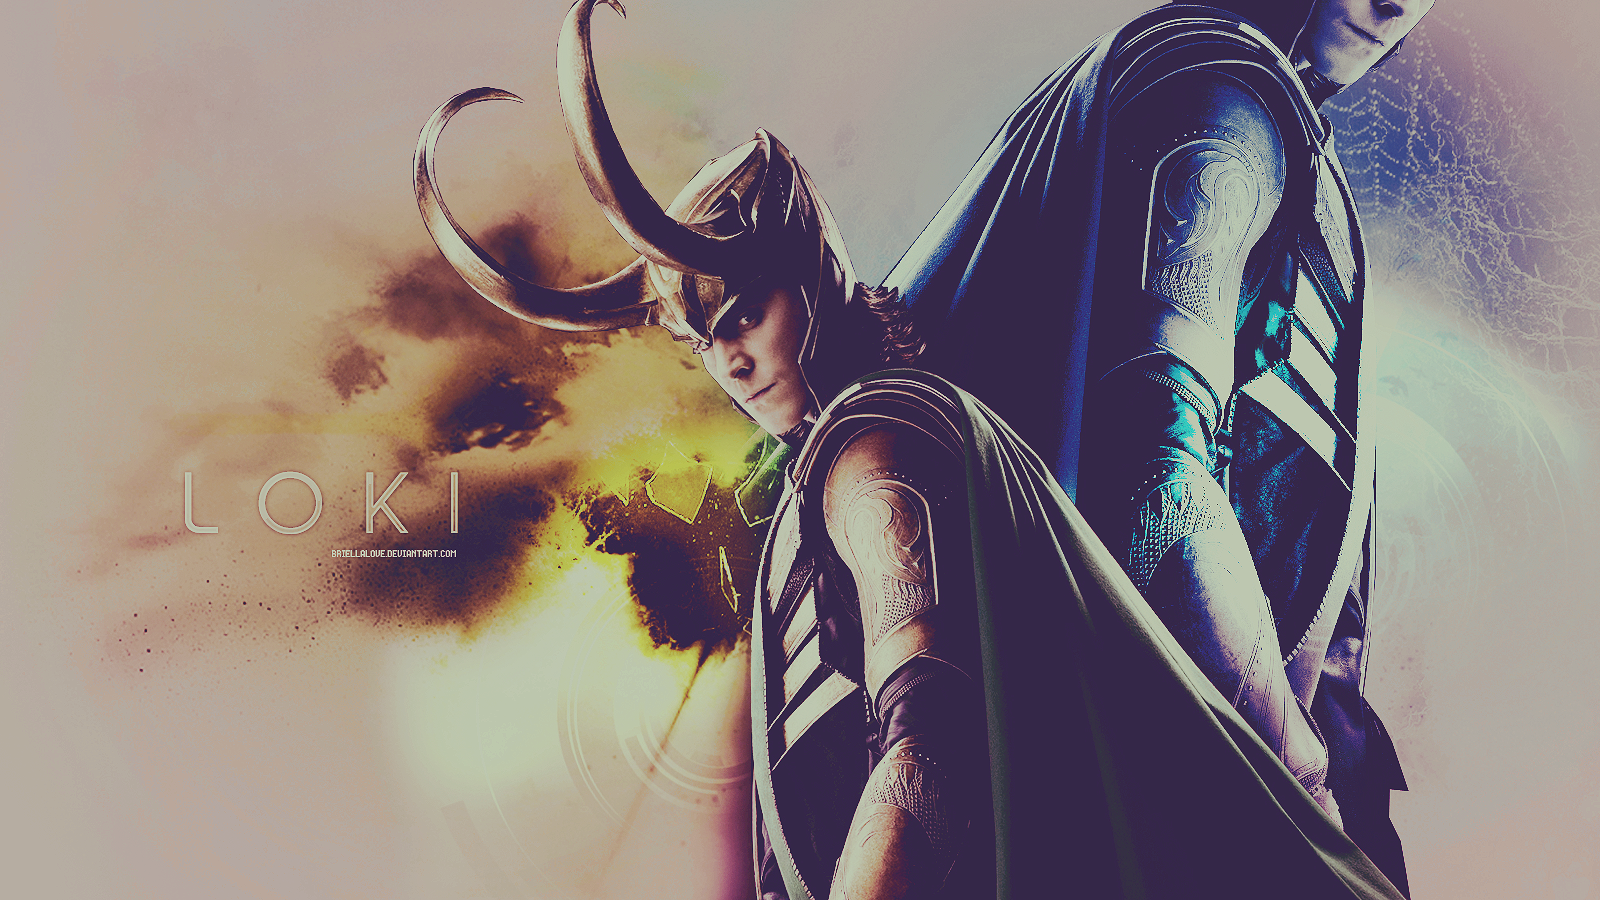 Loki the avengers wallpaper by briellalove on